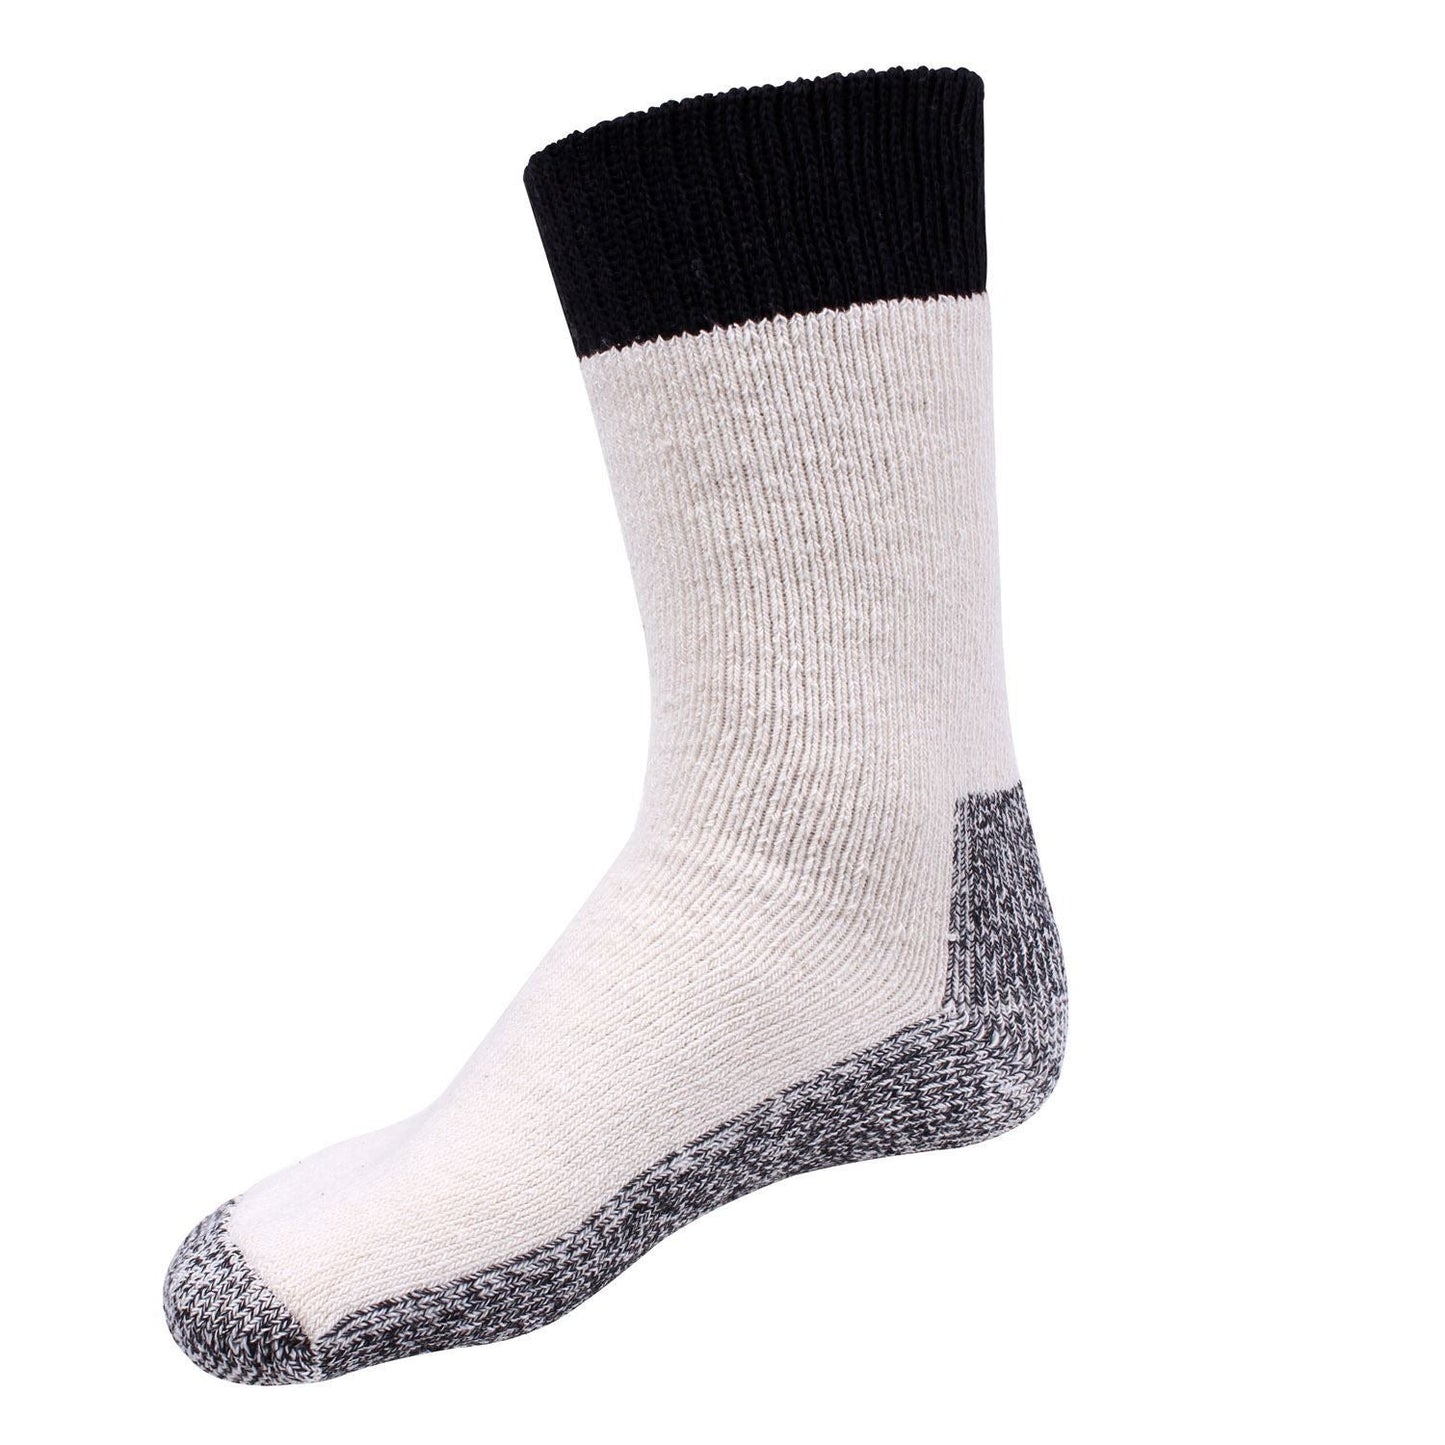 Heavyweight Natural Thermal Boot Socks (5 per pack)